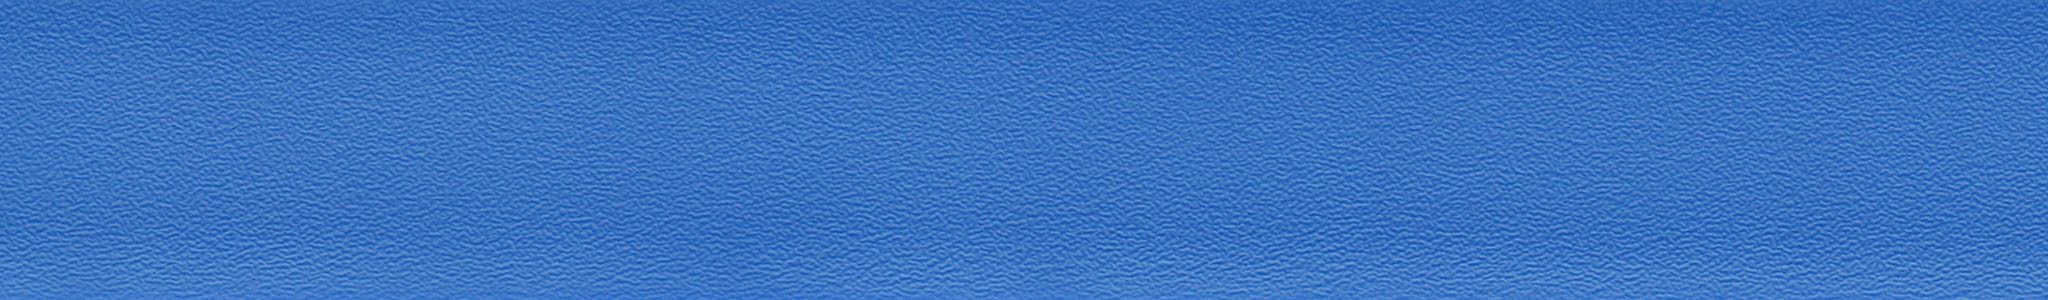 ABS 0125 modrá perlička 22x2mm HU 15125